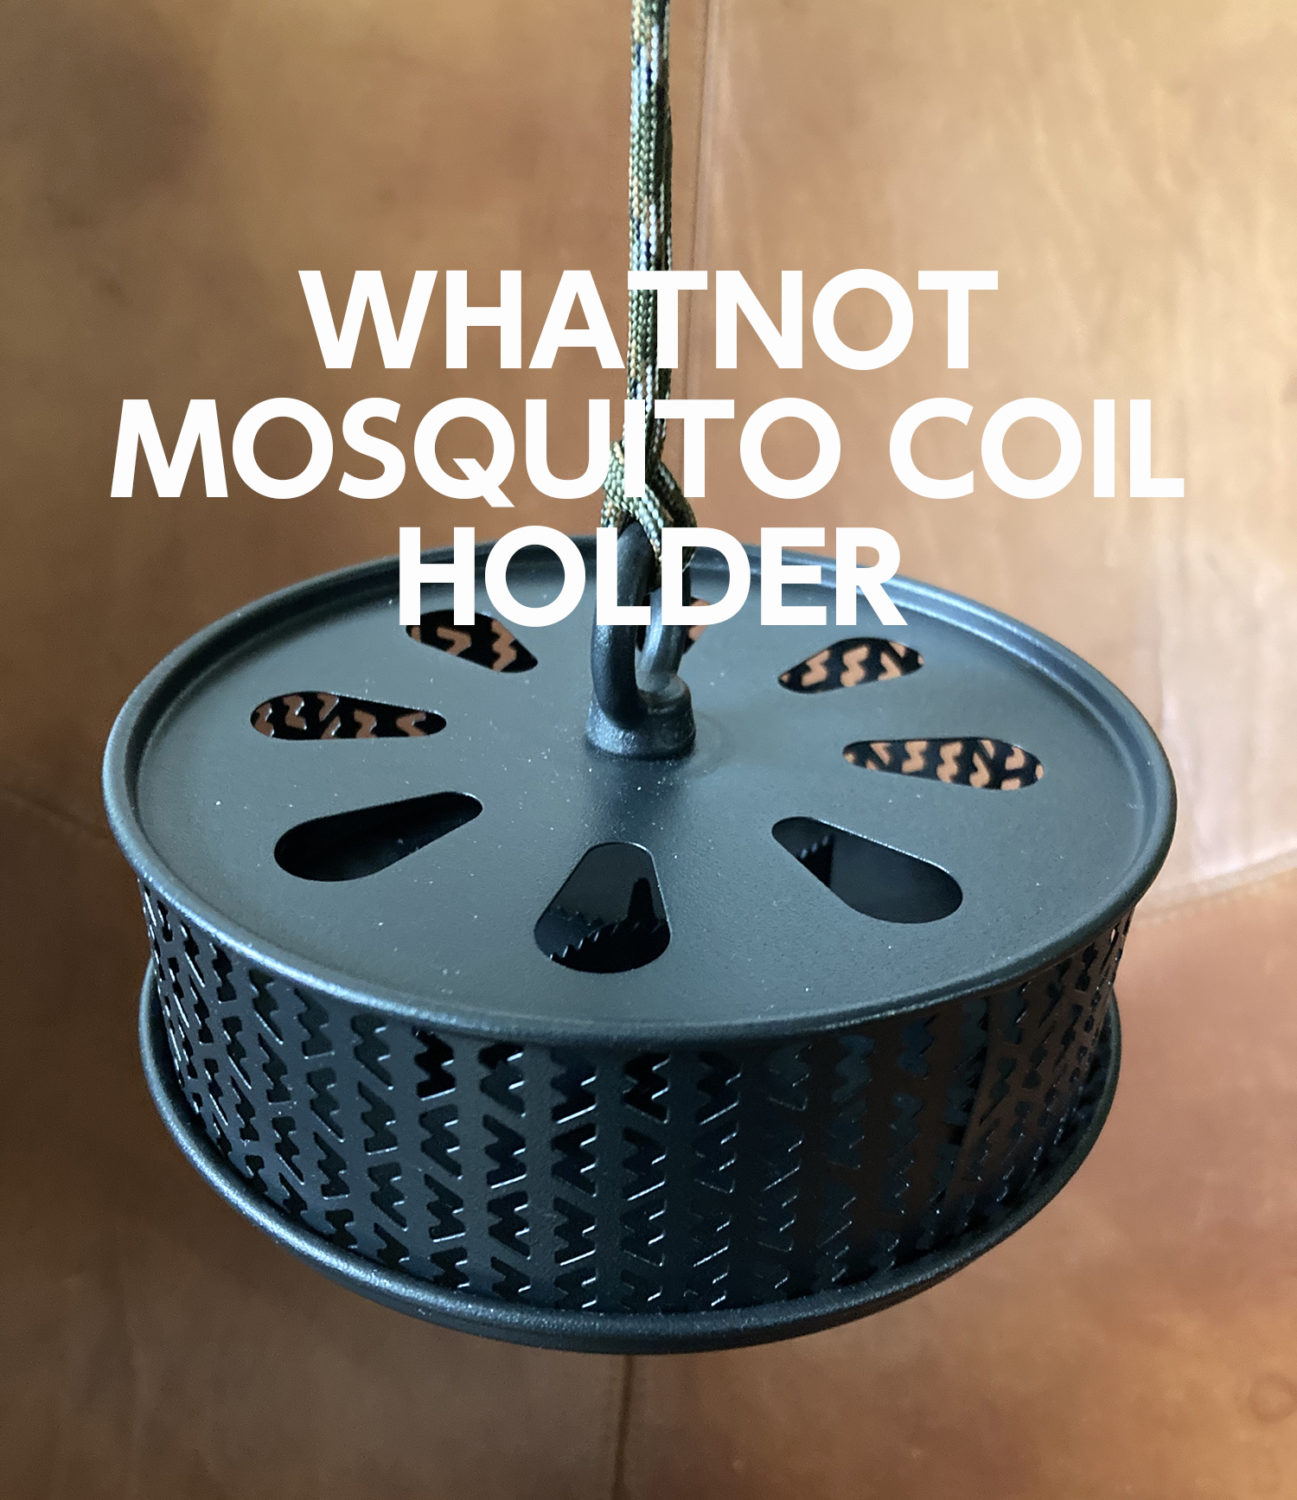 WHATNOT Mosquito Coil Holder ワットノット モスキート コイルホルダー 蚊取り線香 MCH-01-BK 